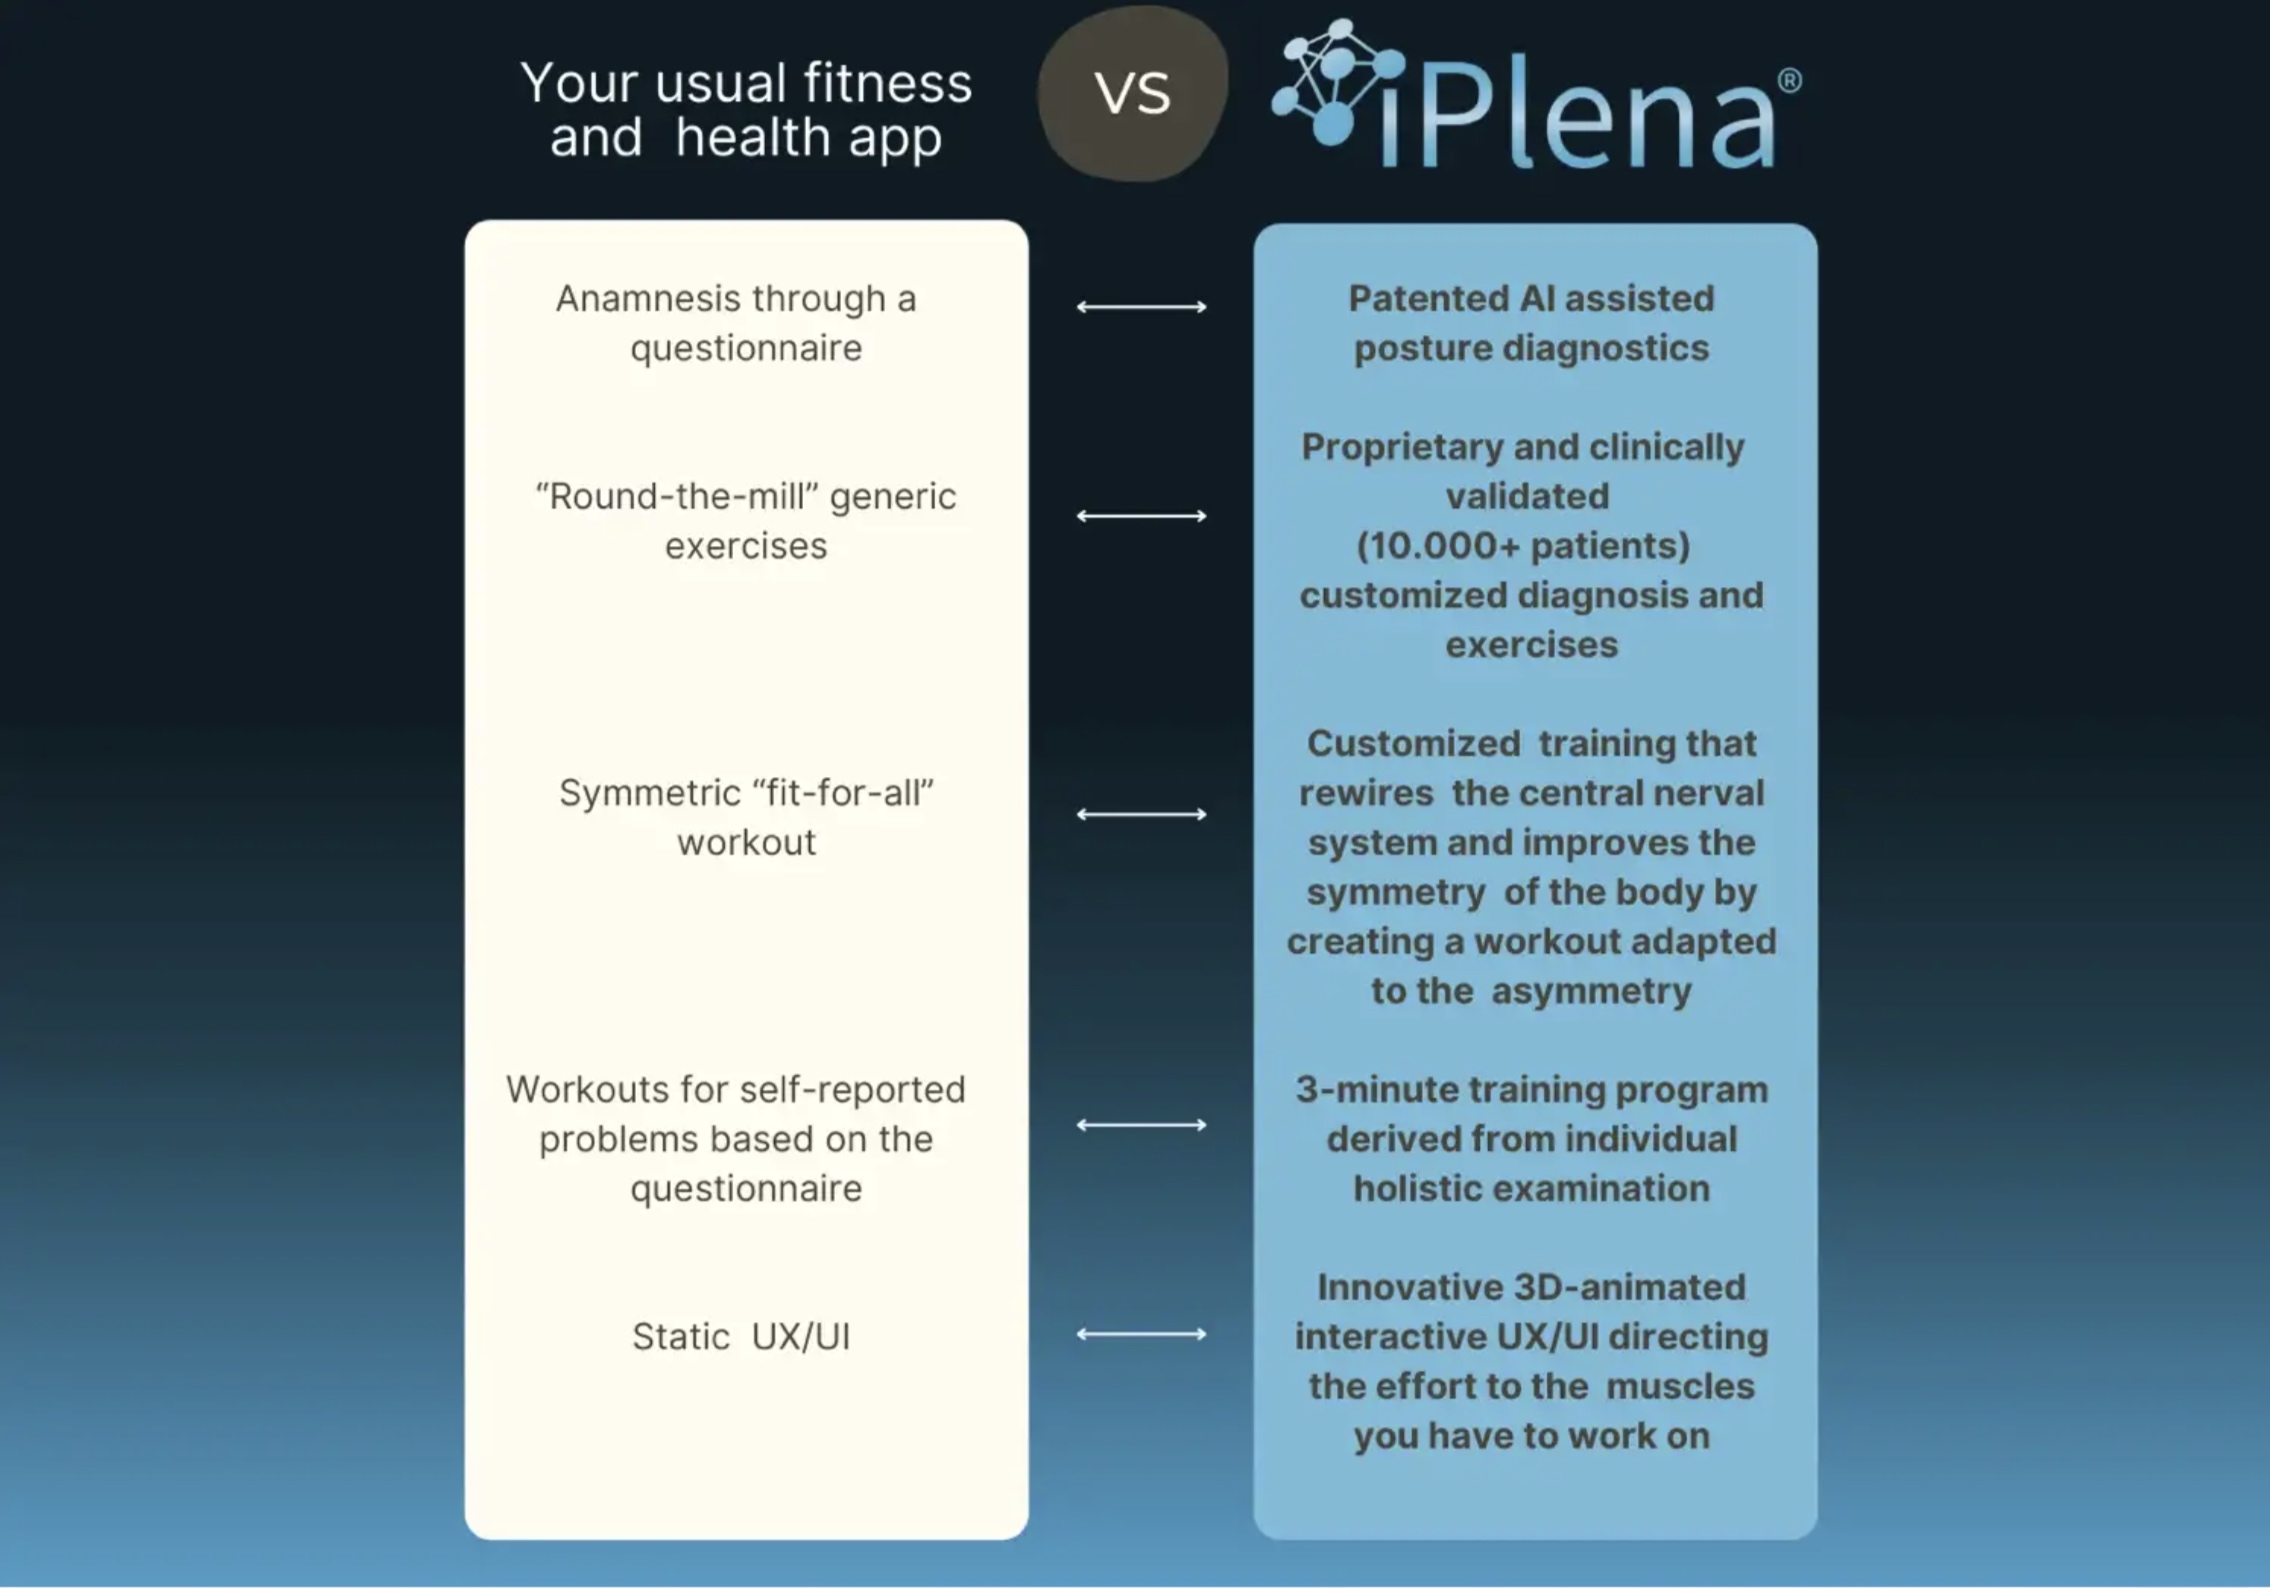 iPlena vs Other apps